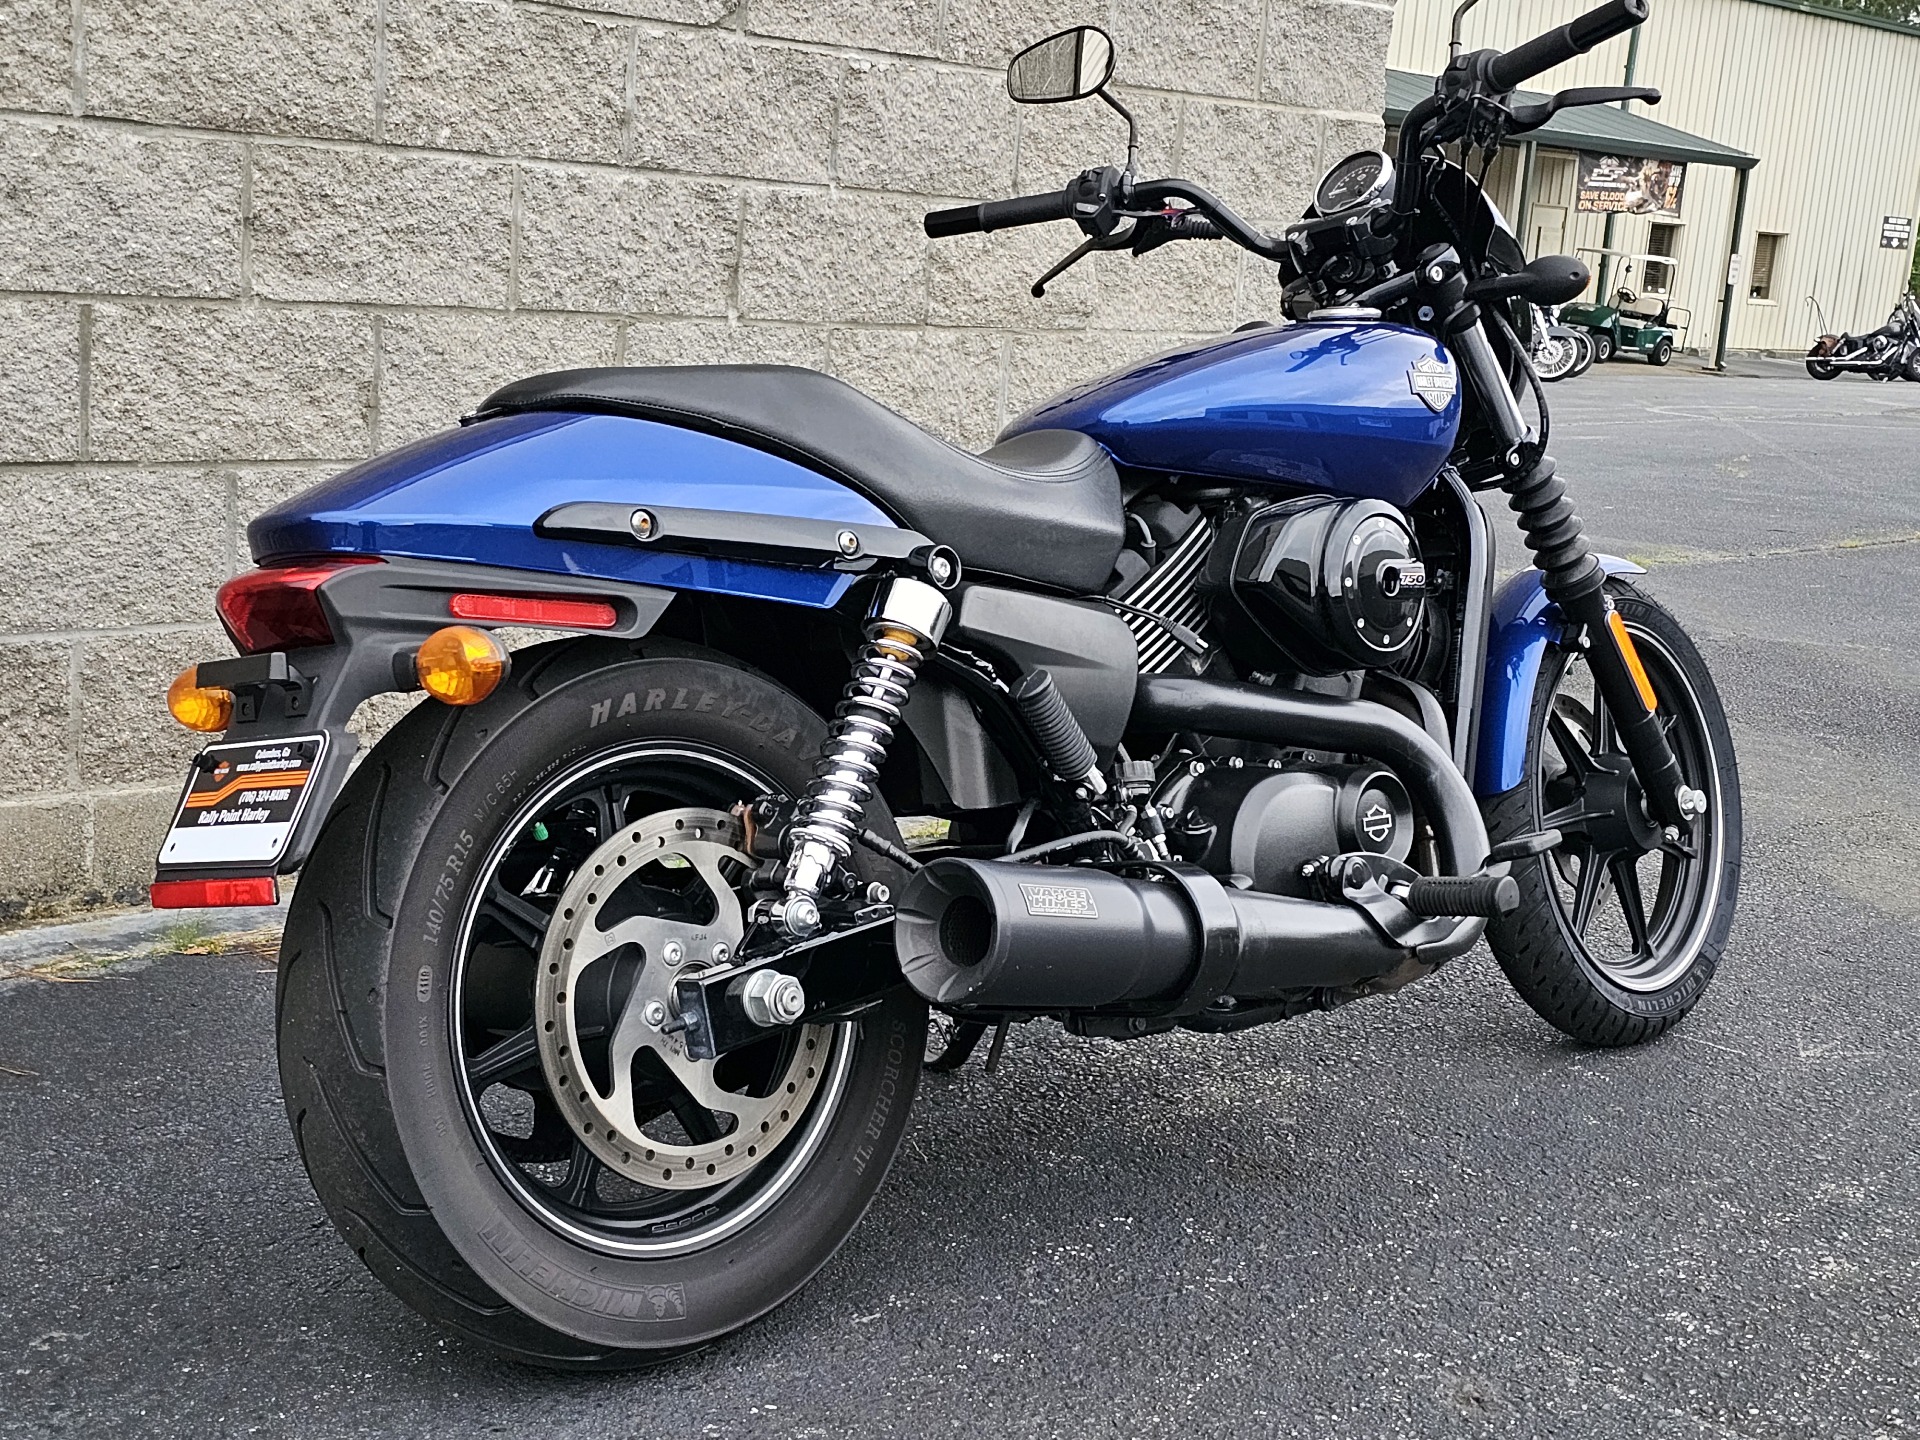 2016 Harley-Davidson Street® 750 in Columbus, Georgia - Photo 8